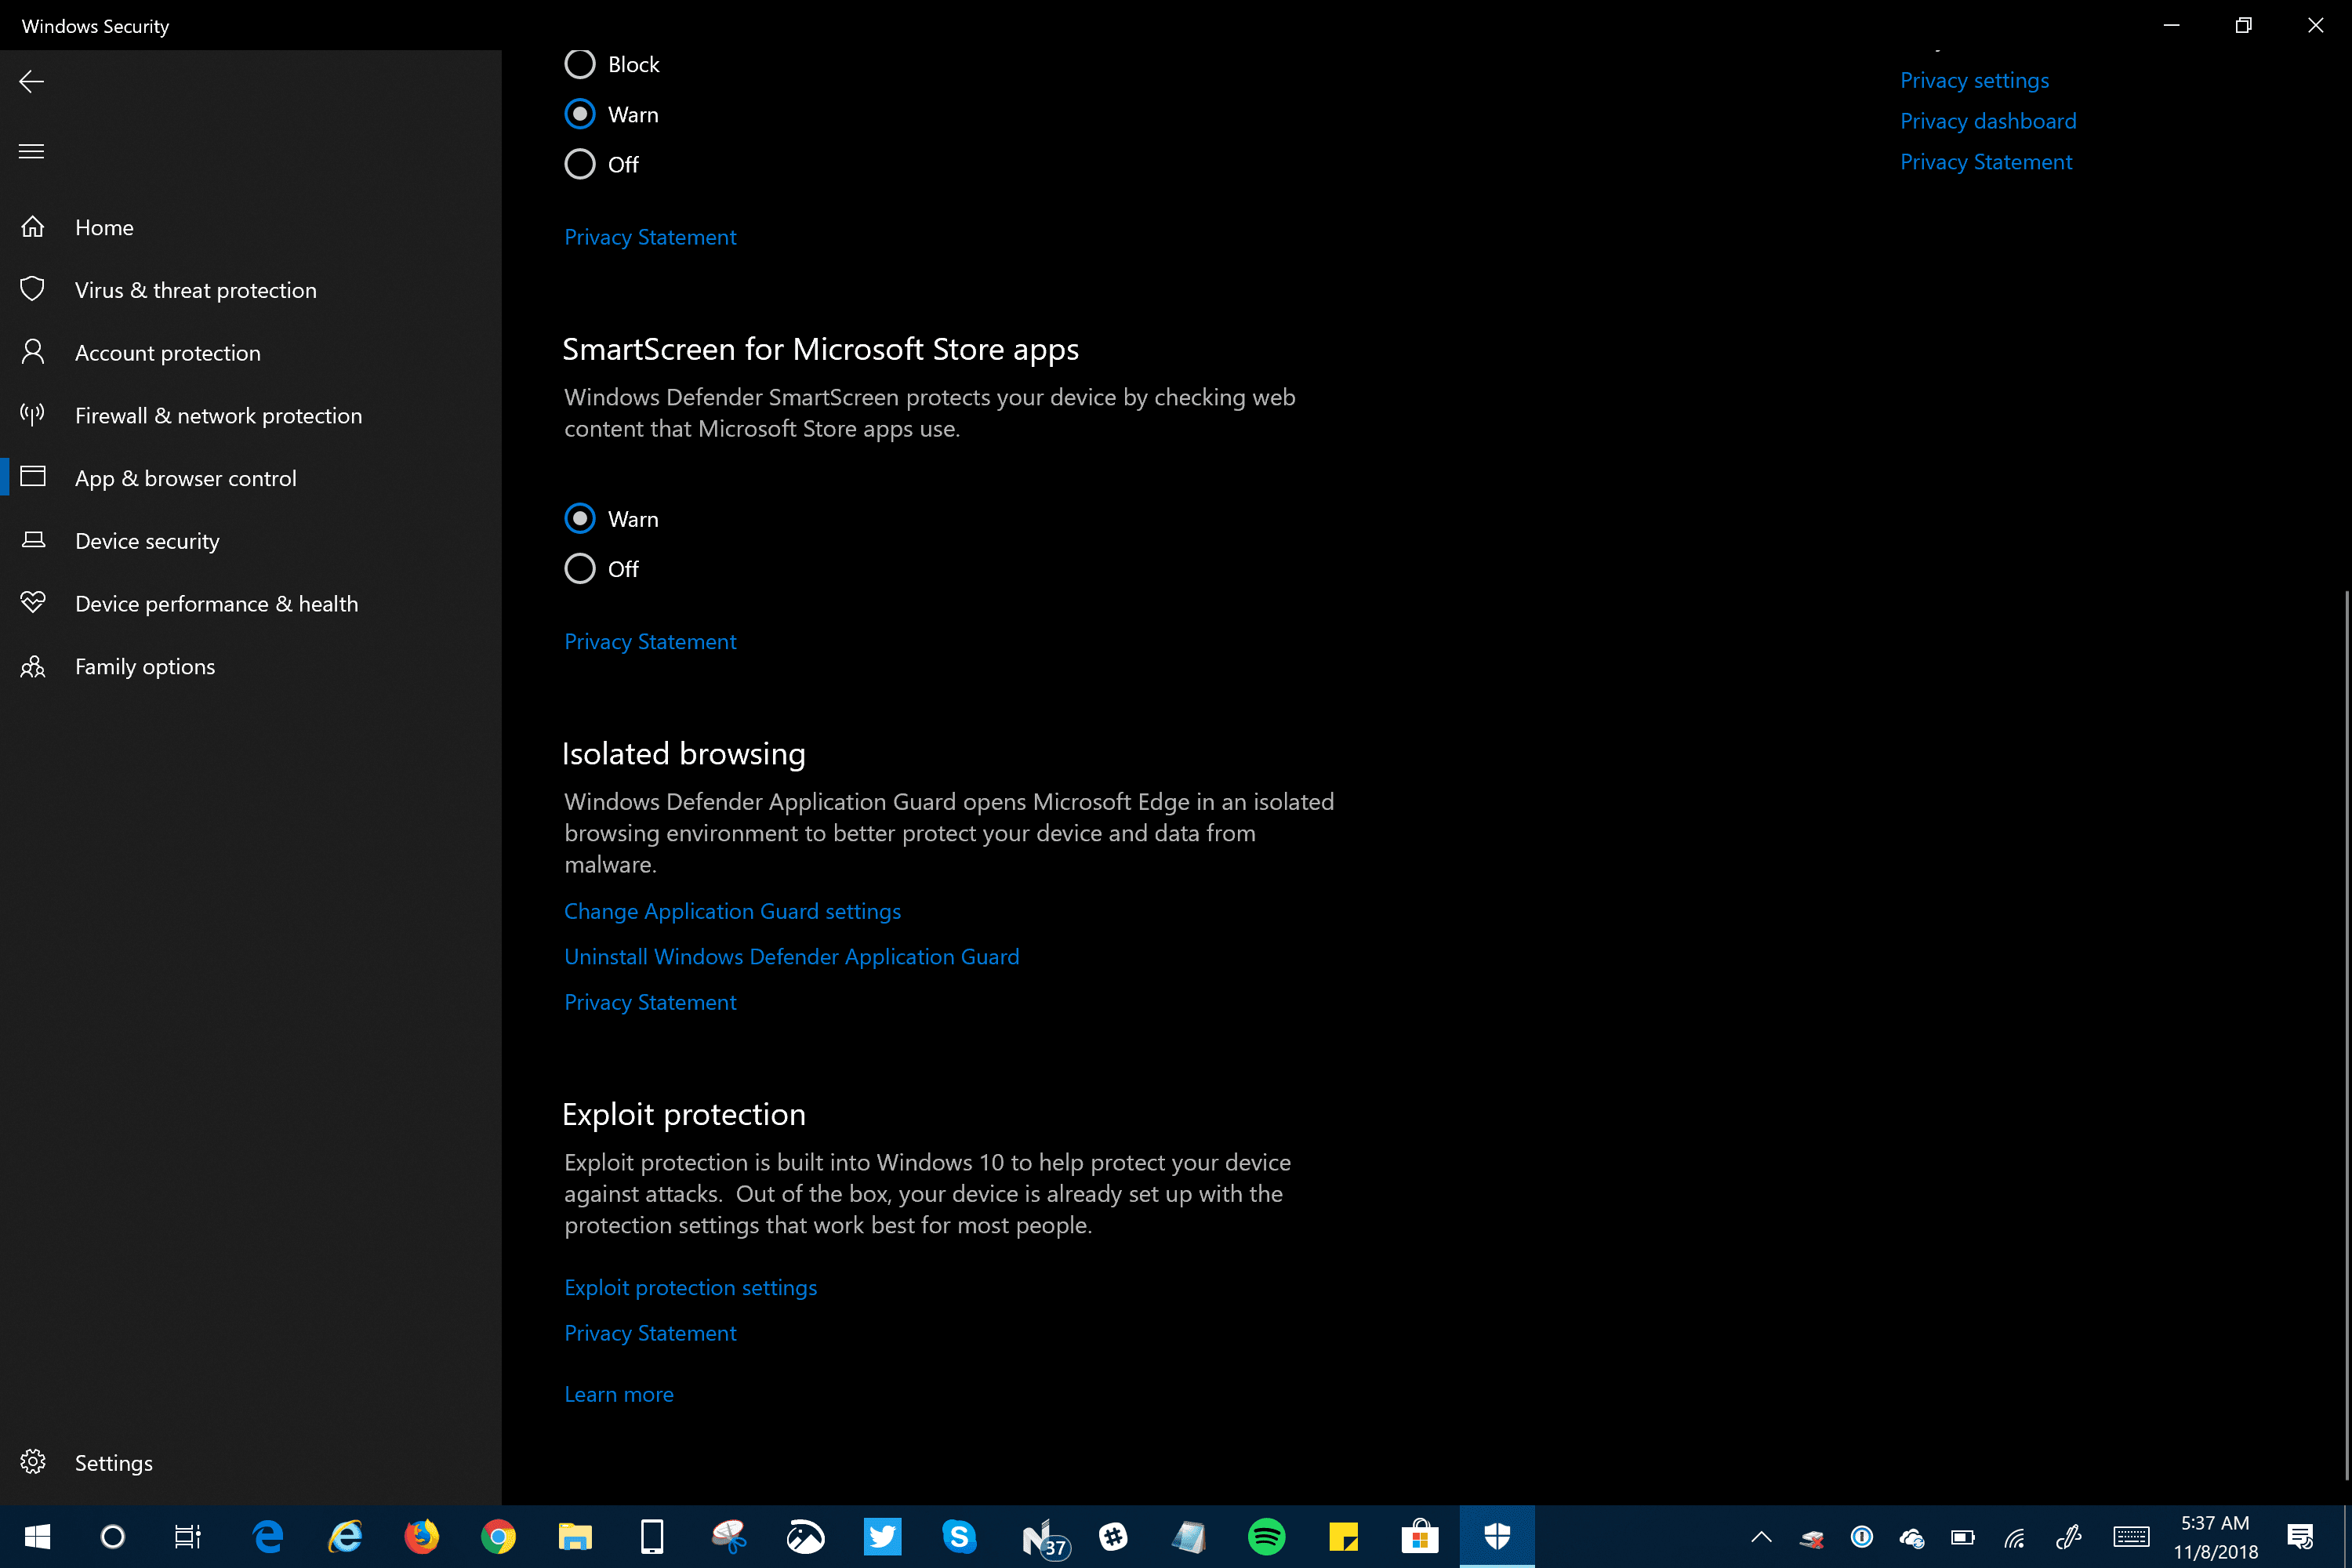 Windows 10 19H1 Build 18277